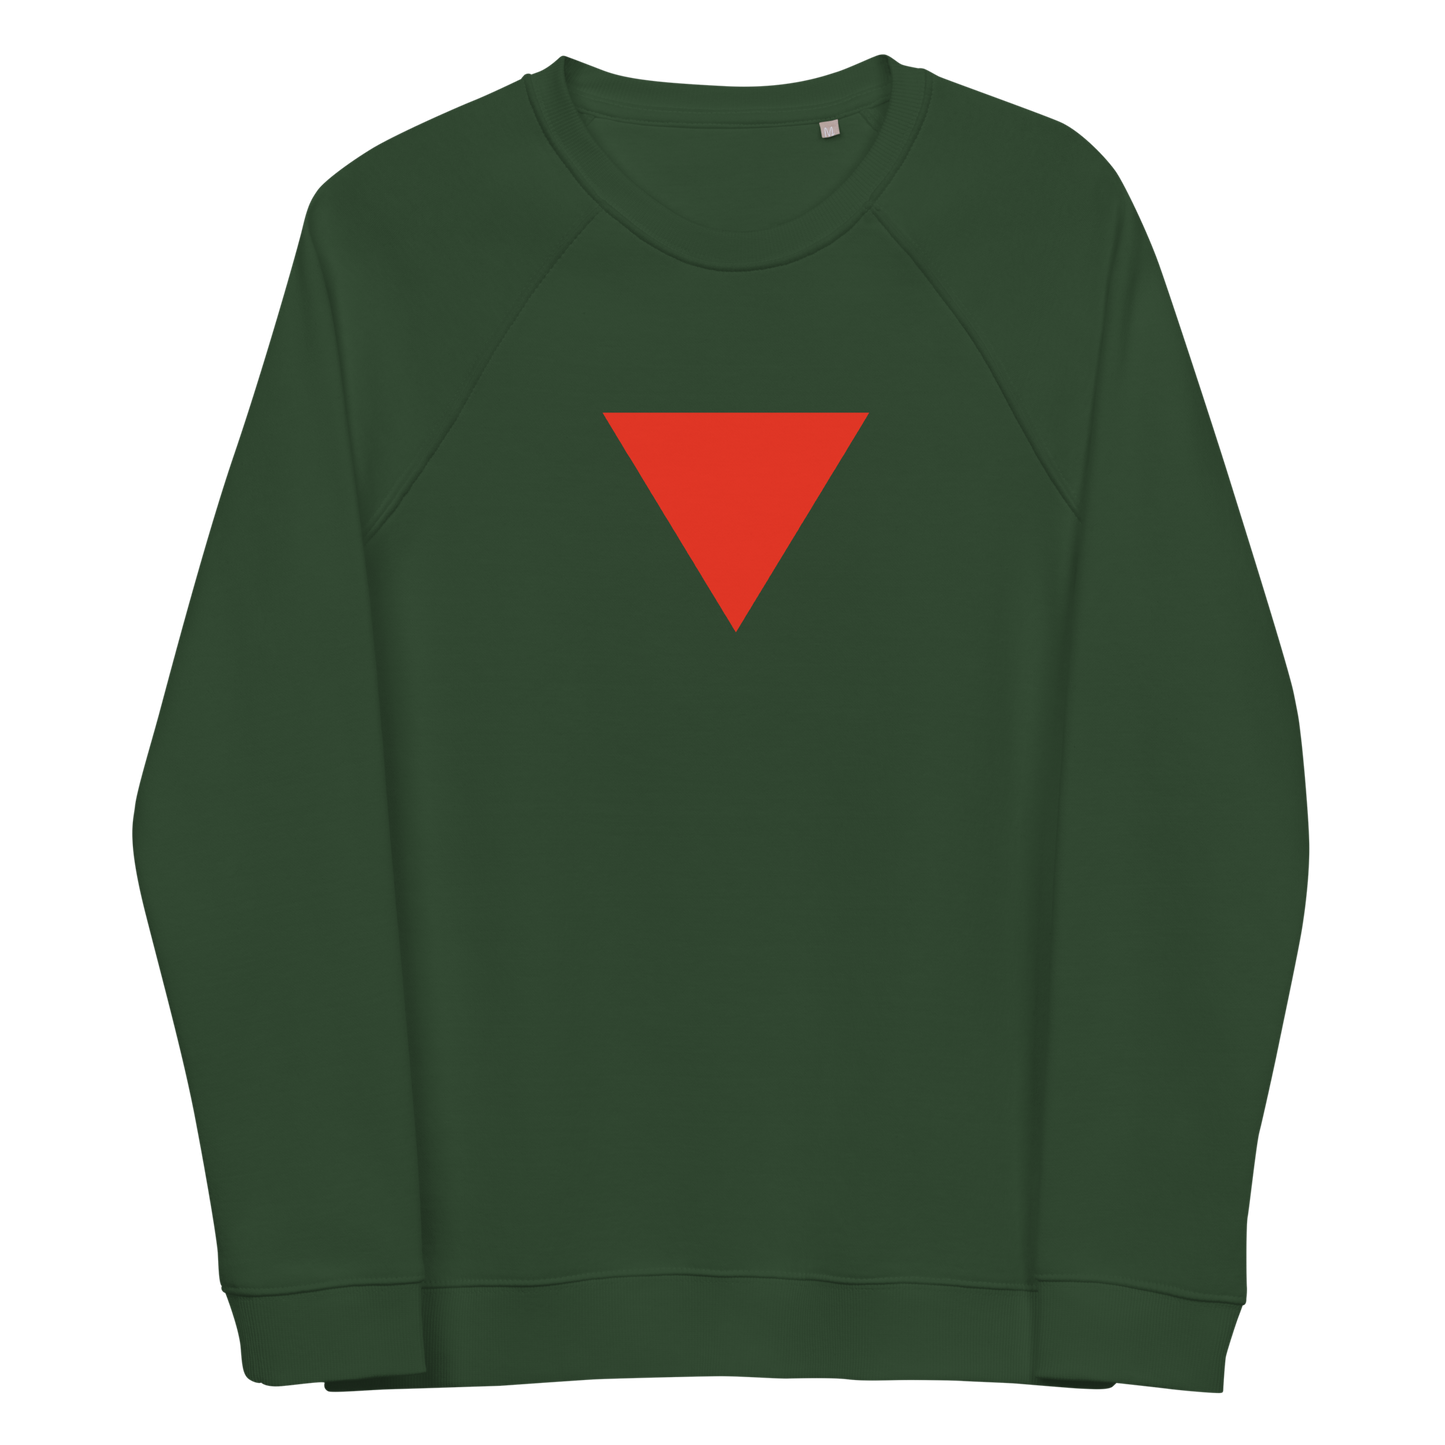 The Arrow Sweatshirt